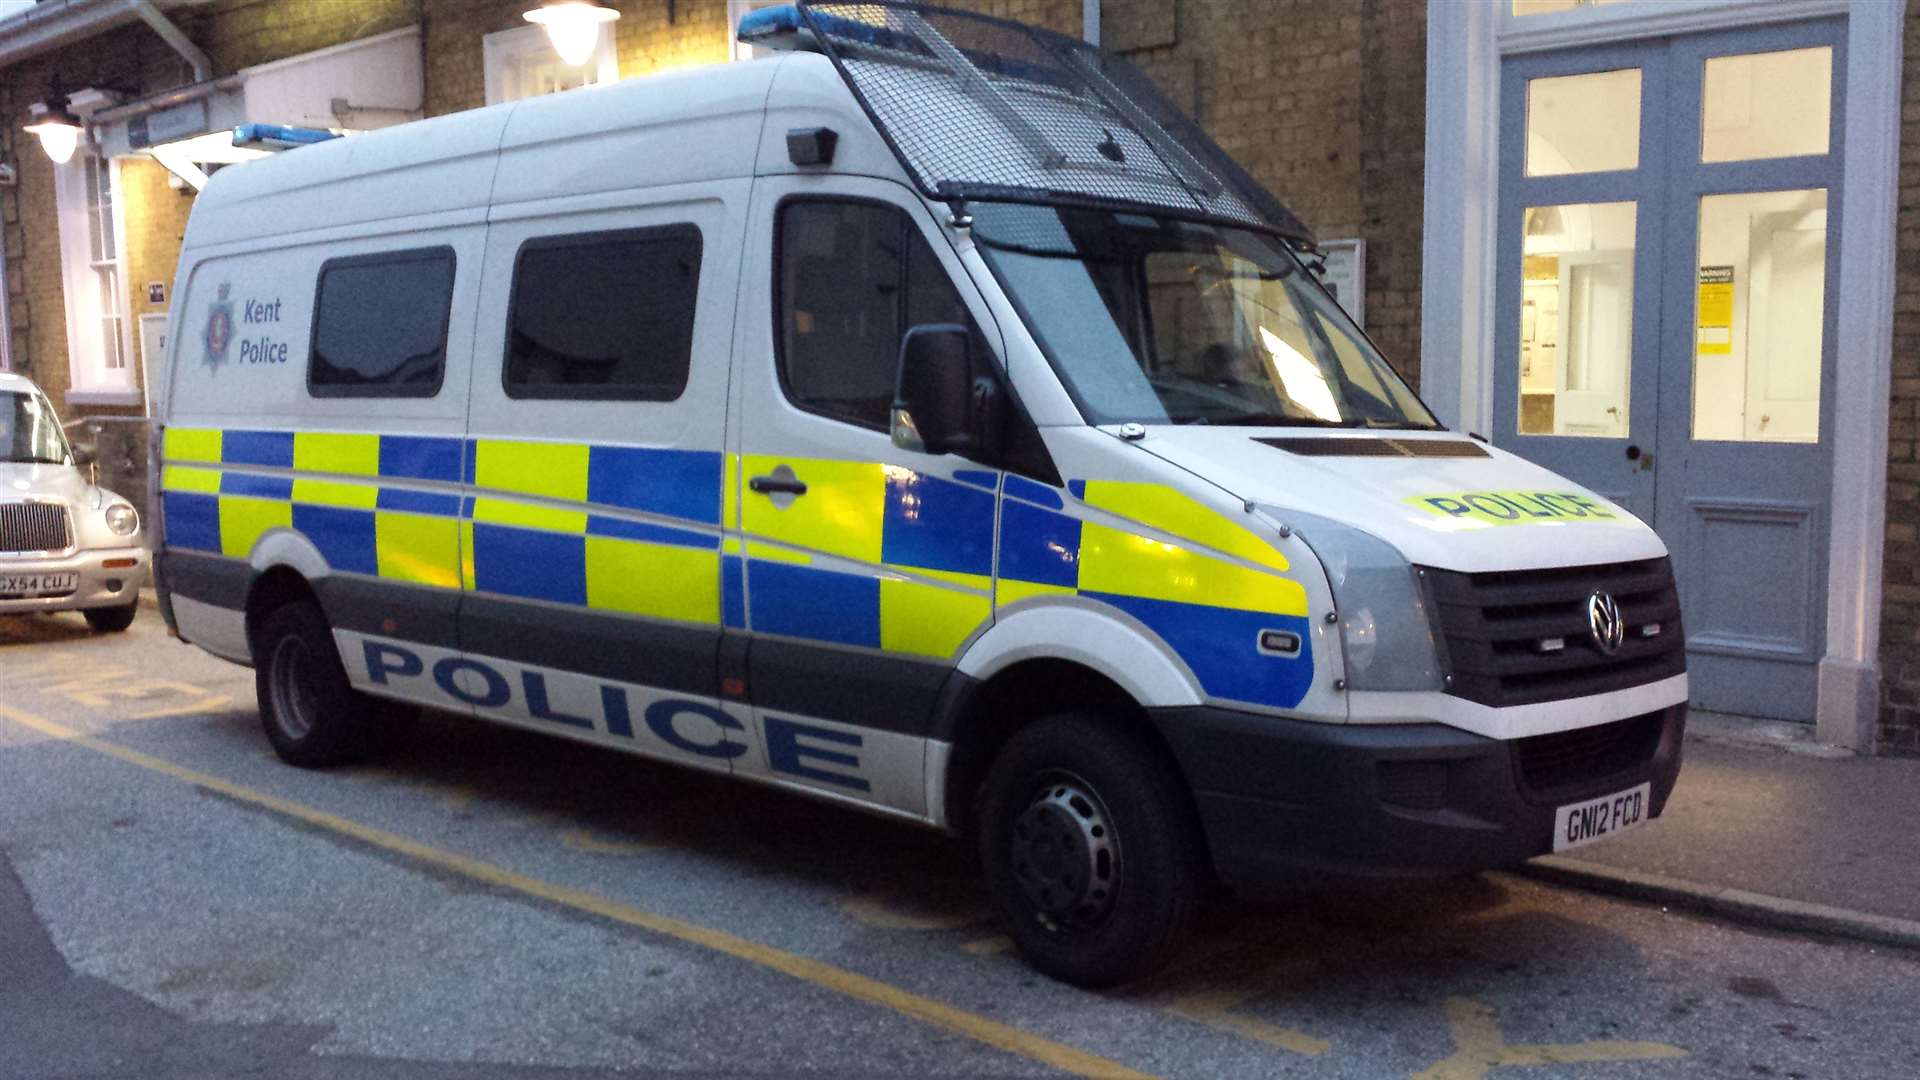 Police van parked at station.